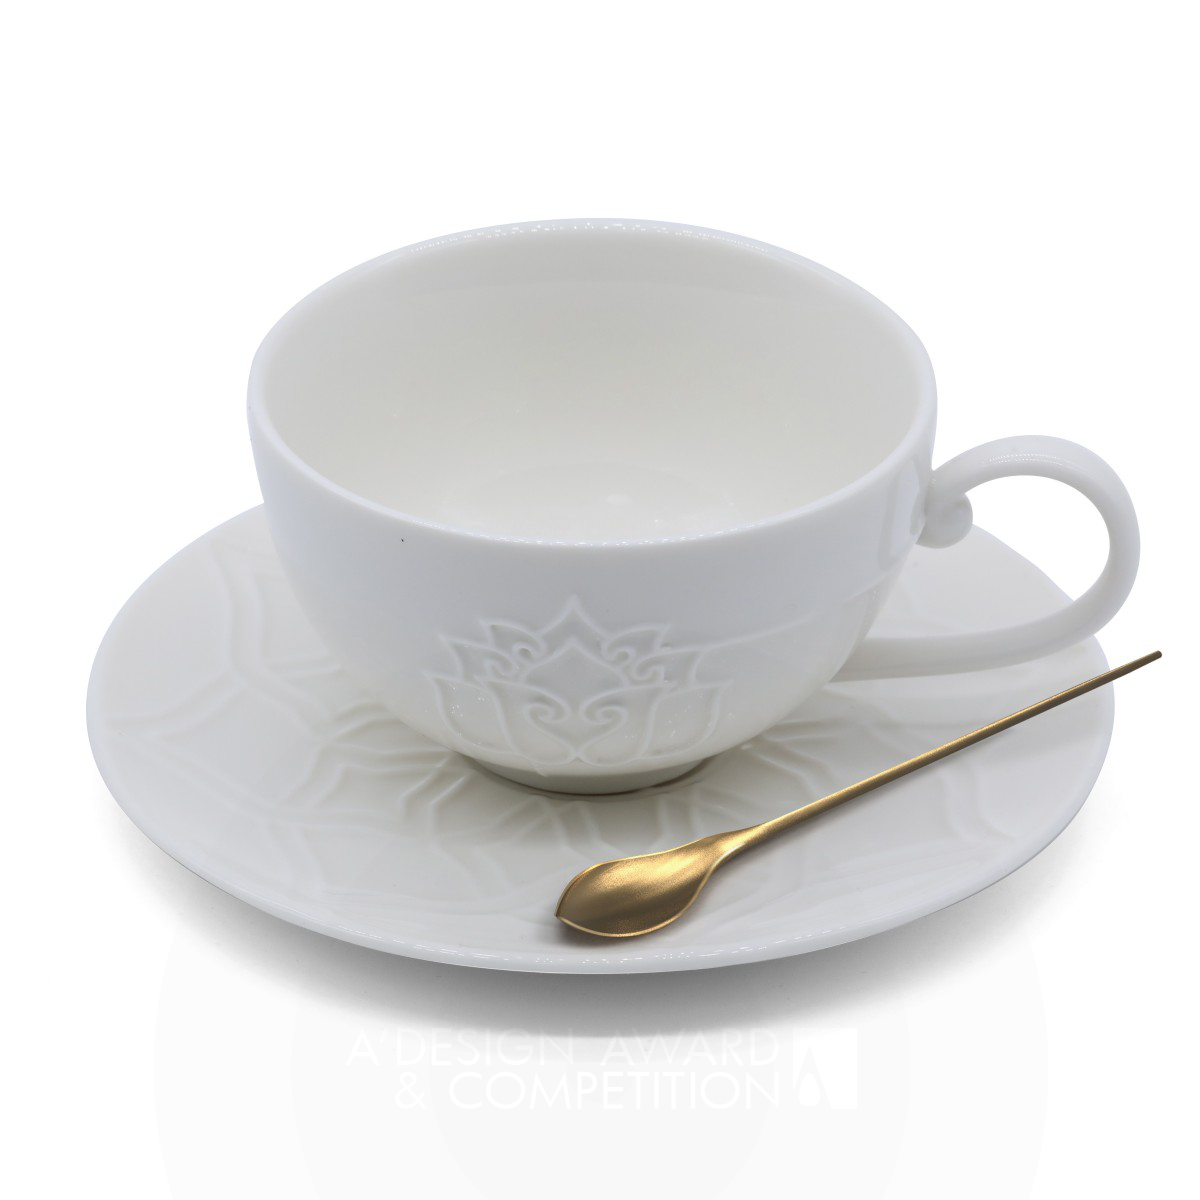 He He Lotus Coffee Cup by Sun Jian Iron Bakeware, Tableware, Drinkware and Cookware Design Award Winner 2022 